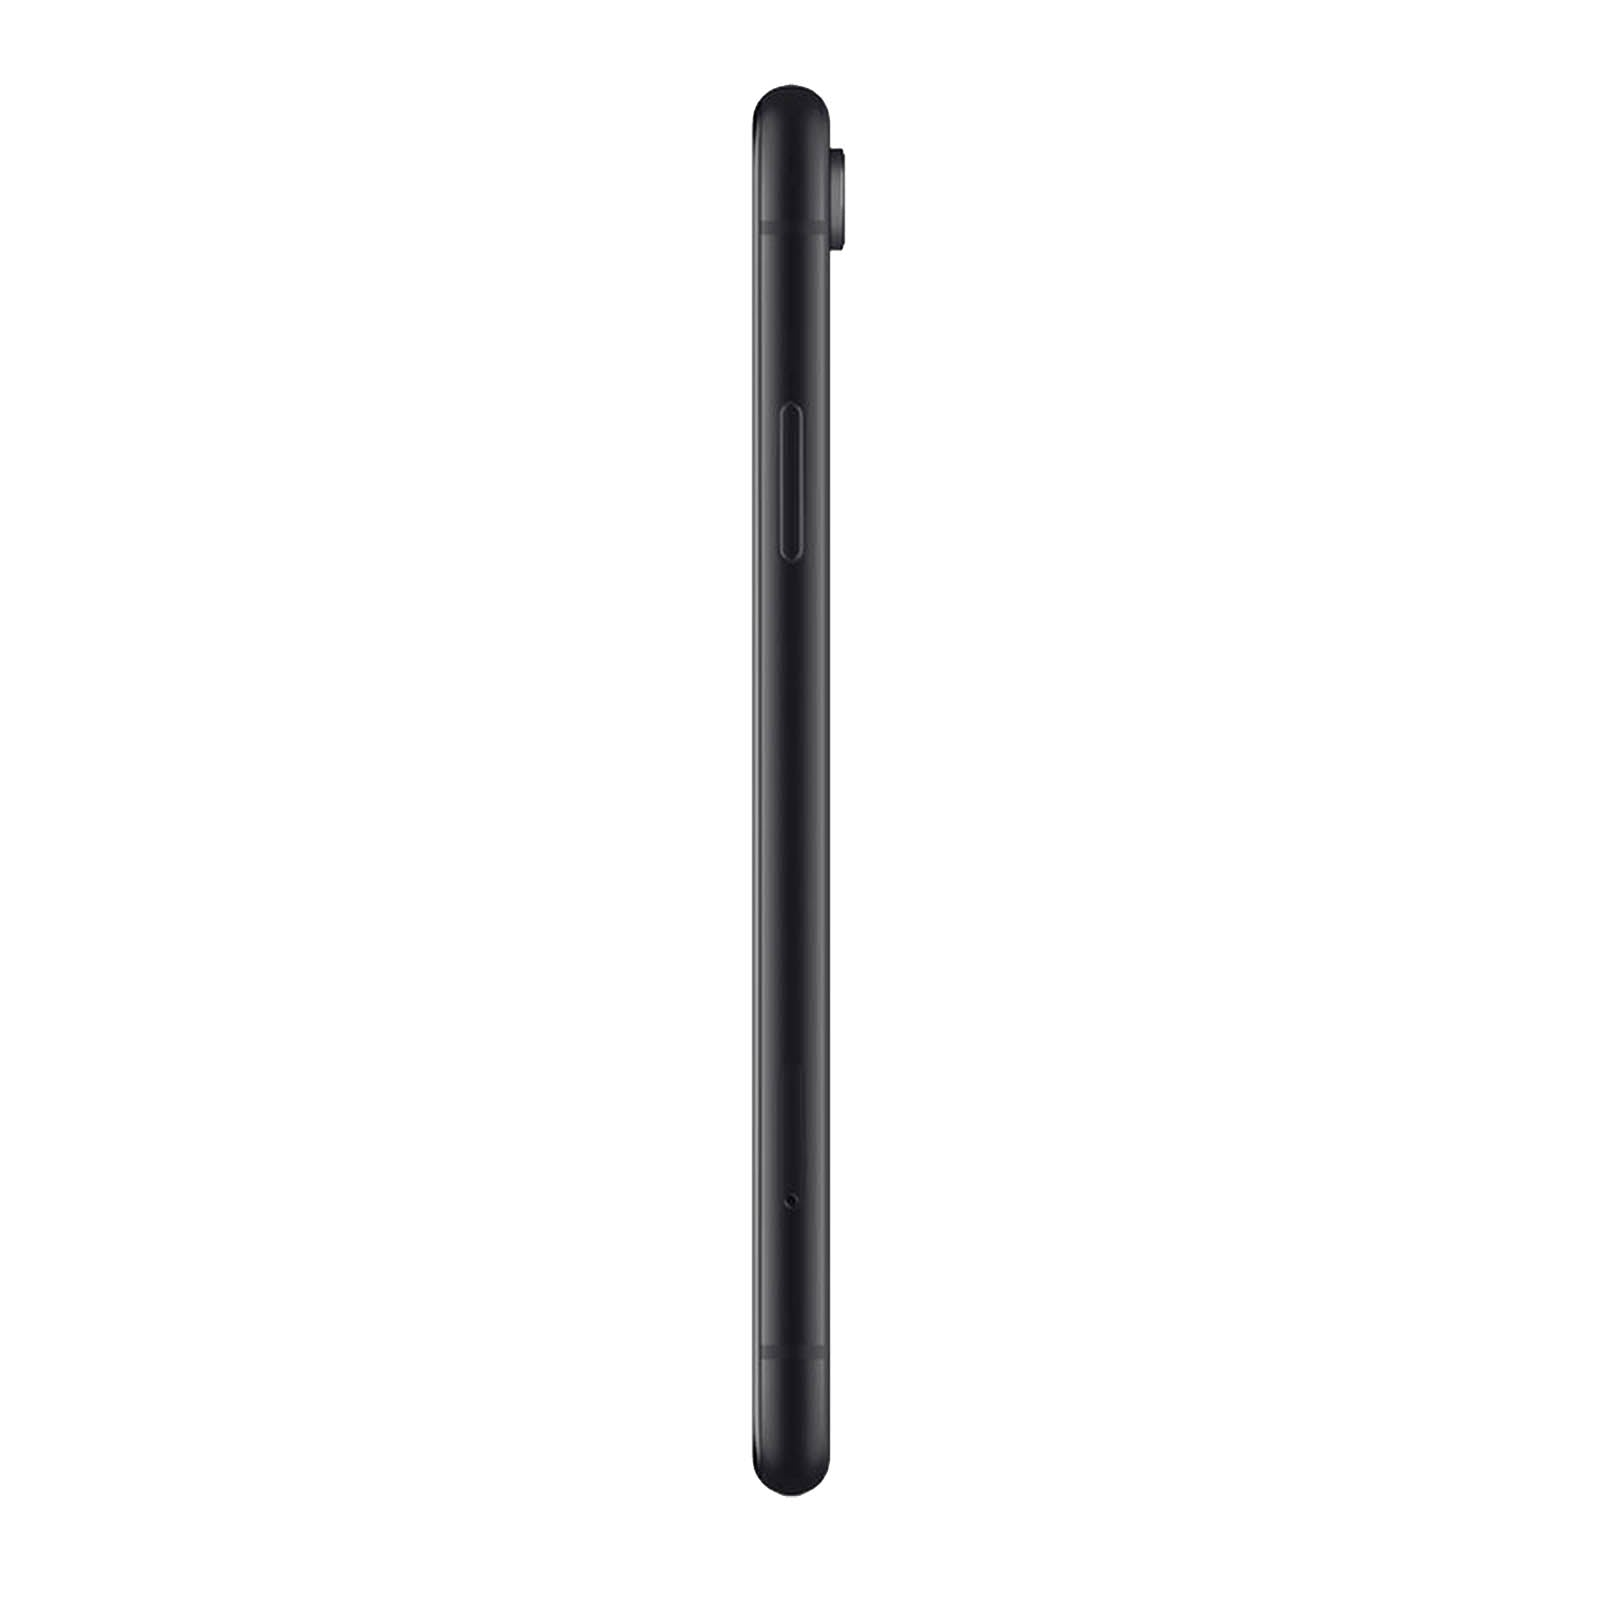 Apple iPhone XR 128GB Black Pristine - Verizon